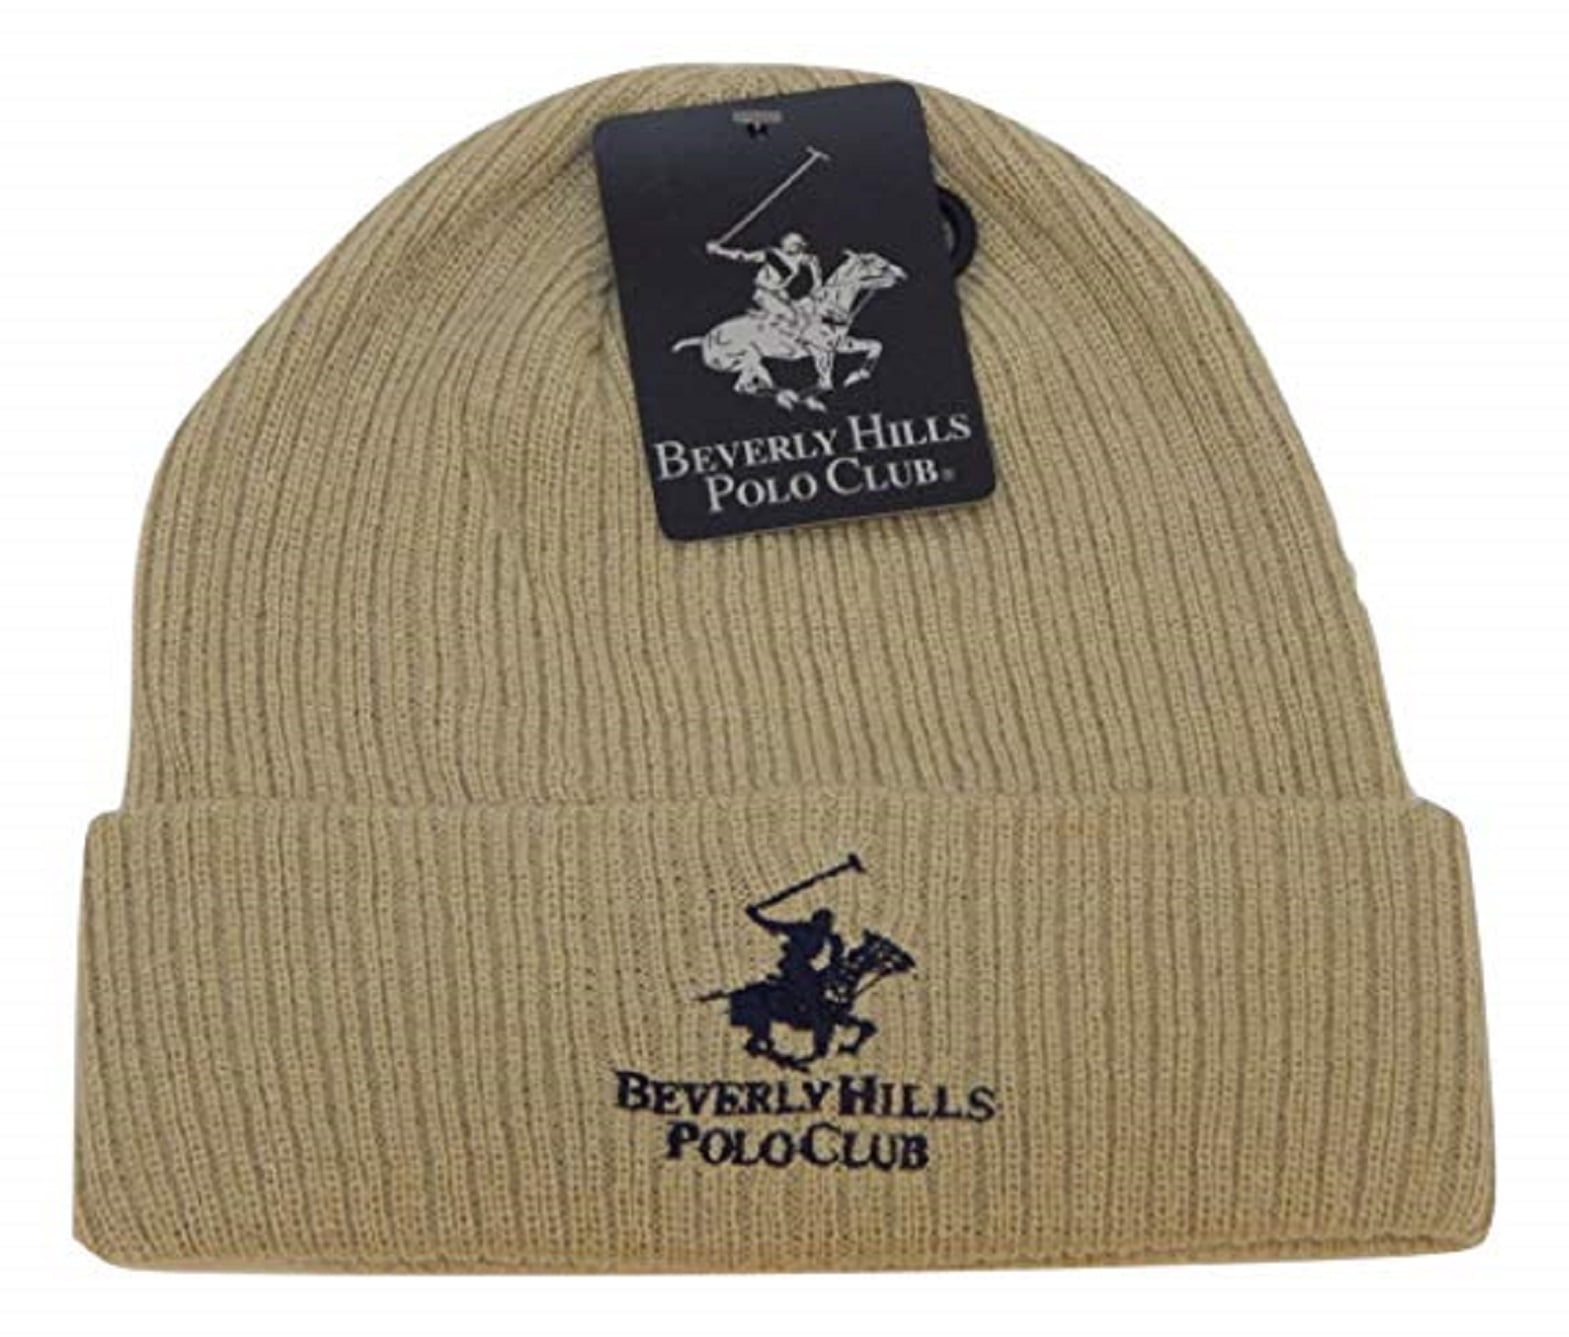 Beverly Hills Polo Club Beanie Hats, Unisex Knit Caps, Beanie Hat Skull ...